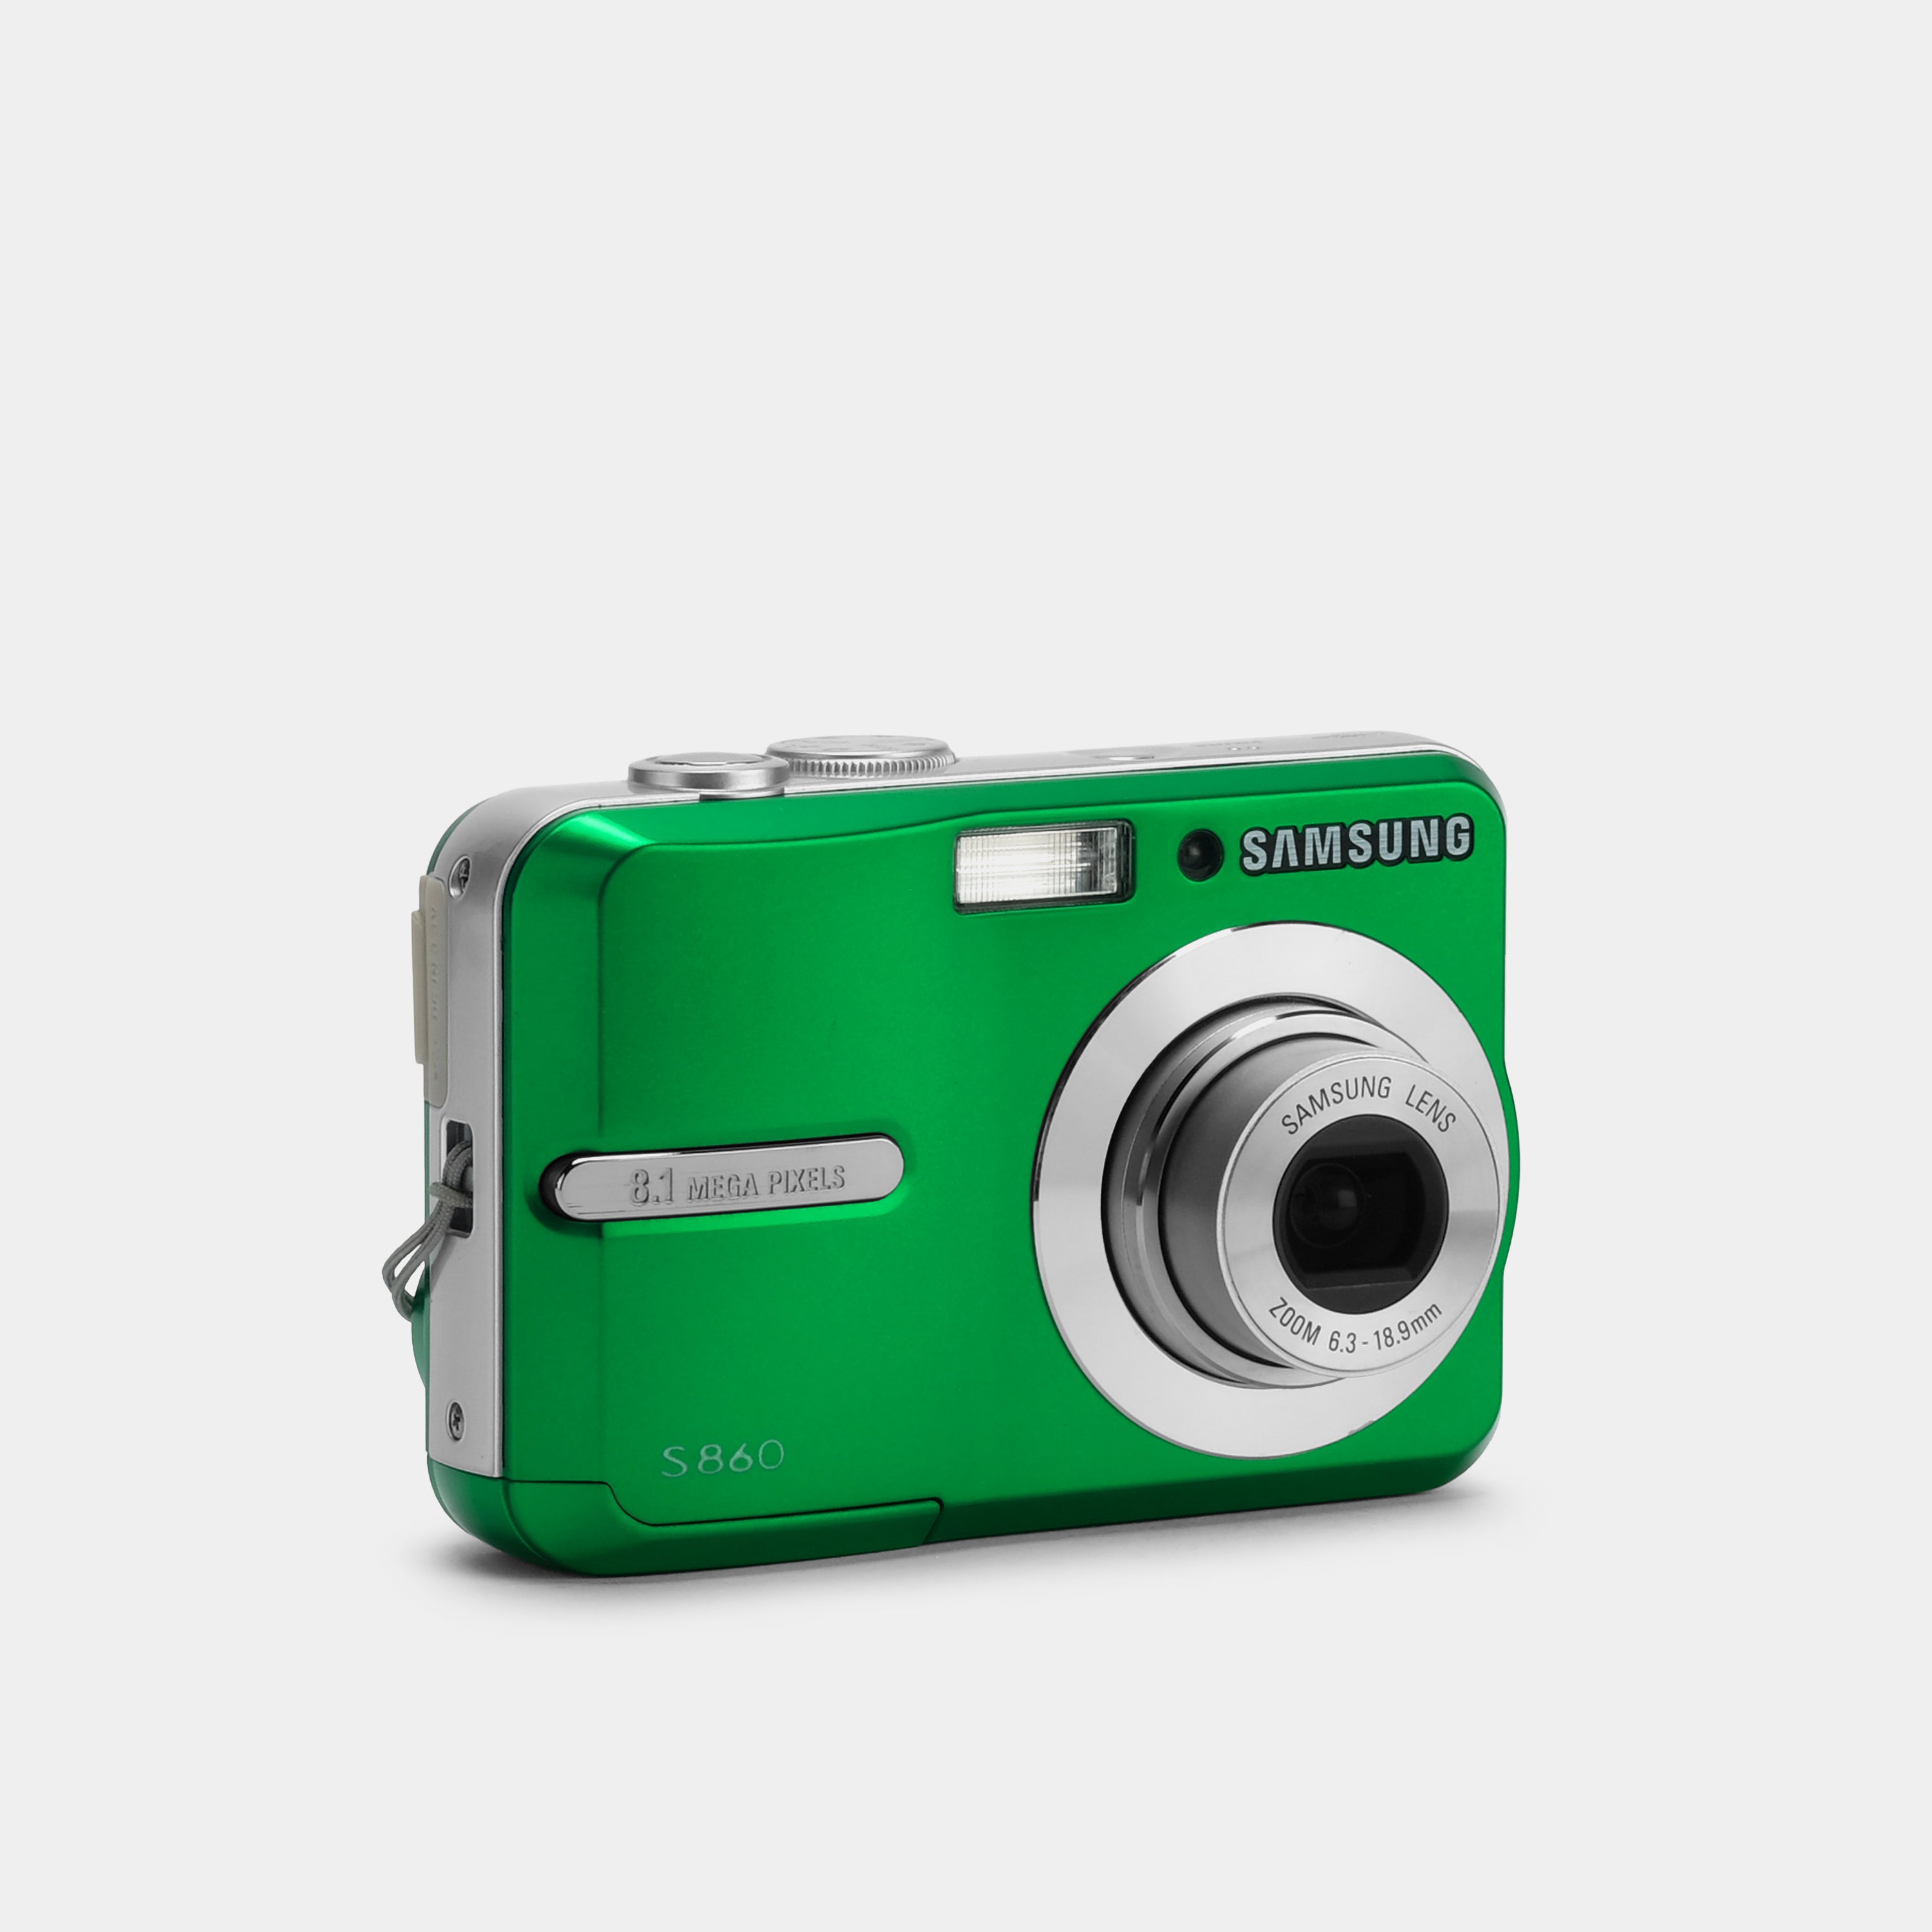 Samsung S860 Green Point and Shoot Digital Camera